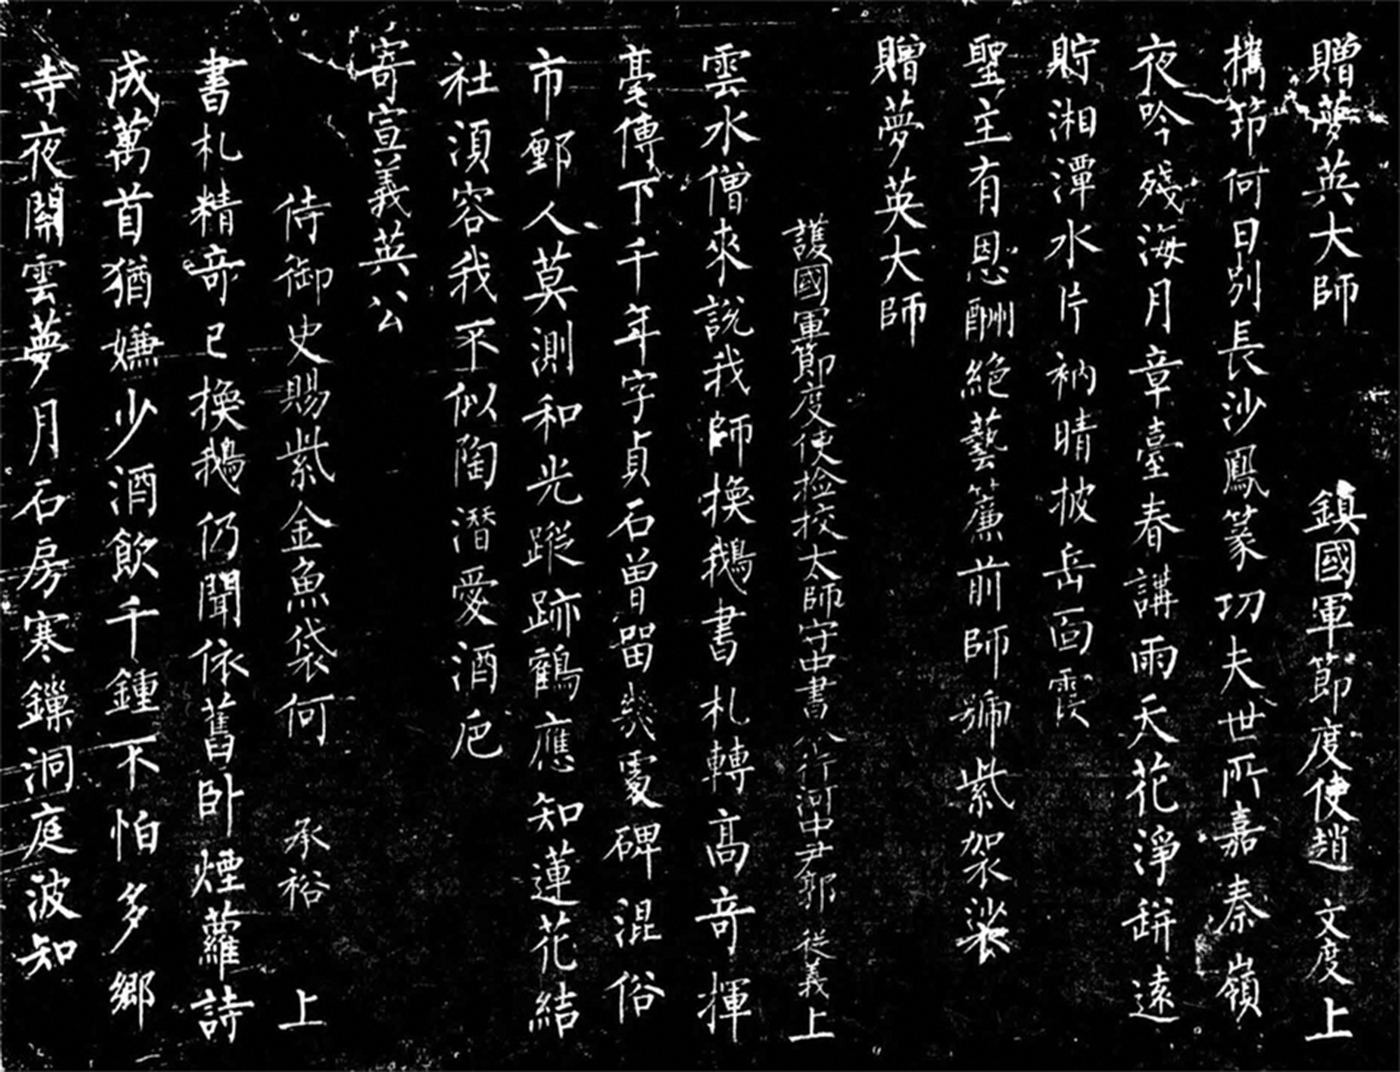 Guo Zhongshu S Archaeology Of Writing Journal Of Chinese History 中國歷史學刊 Cambridge Core